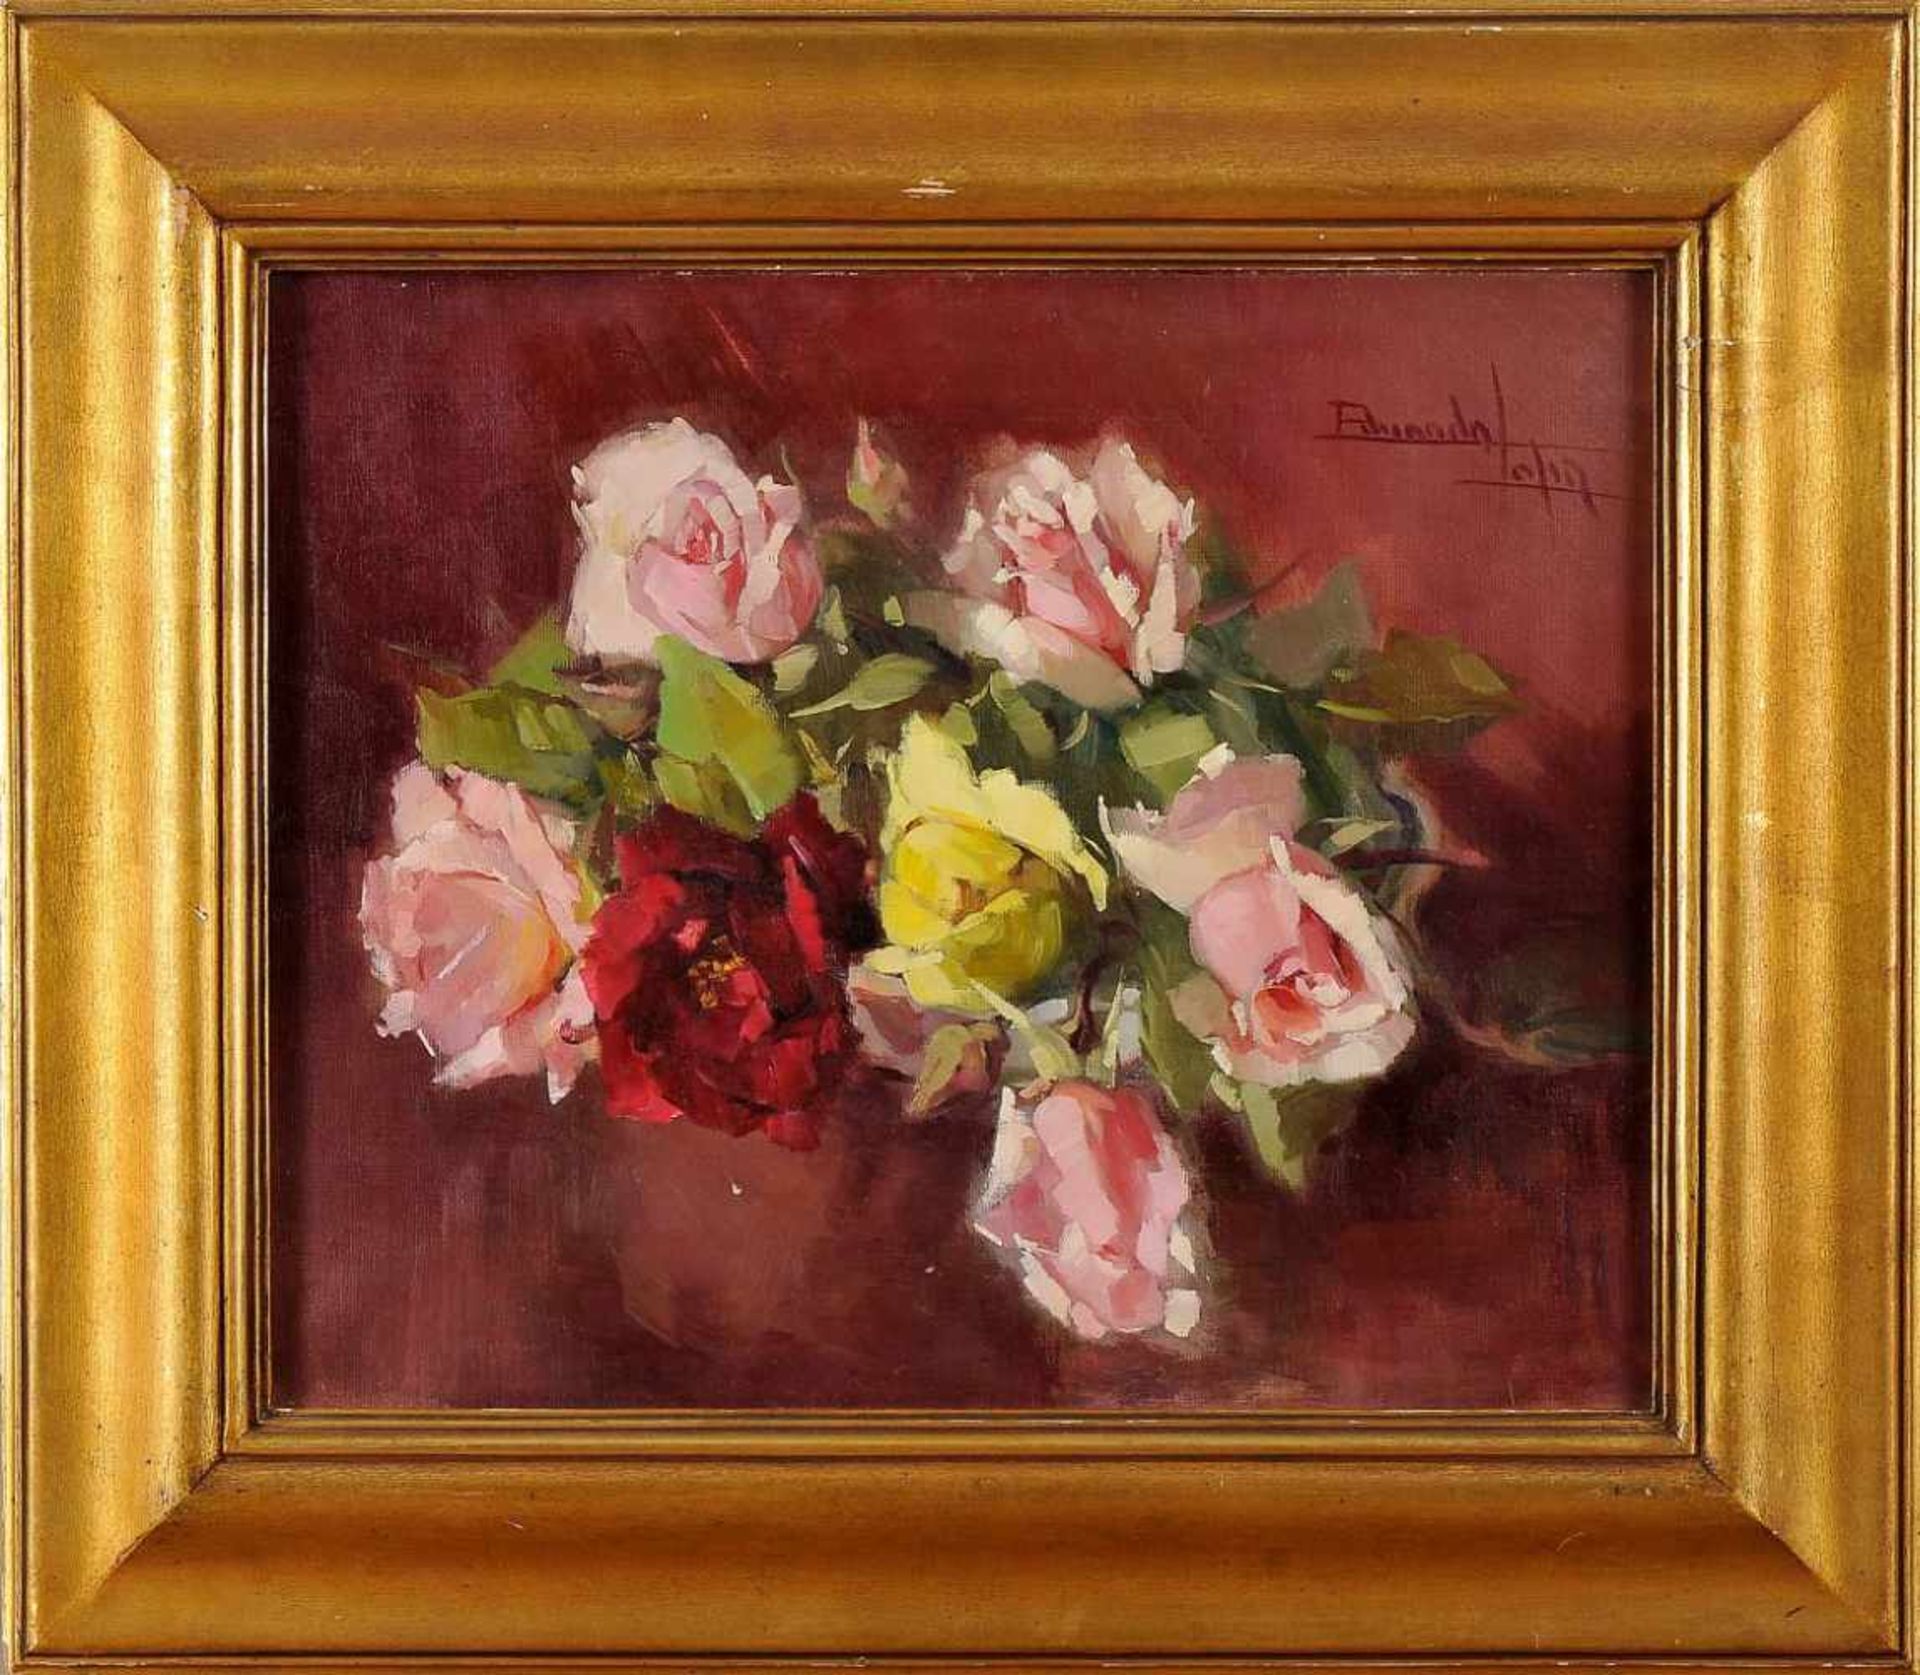 EDUARDA LAPA - 1896-1976EDUARDA LAPA - 1896-1976, Still Life - Roses, oil on canvas, minor faults on